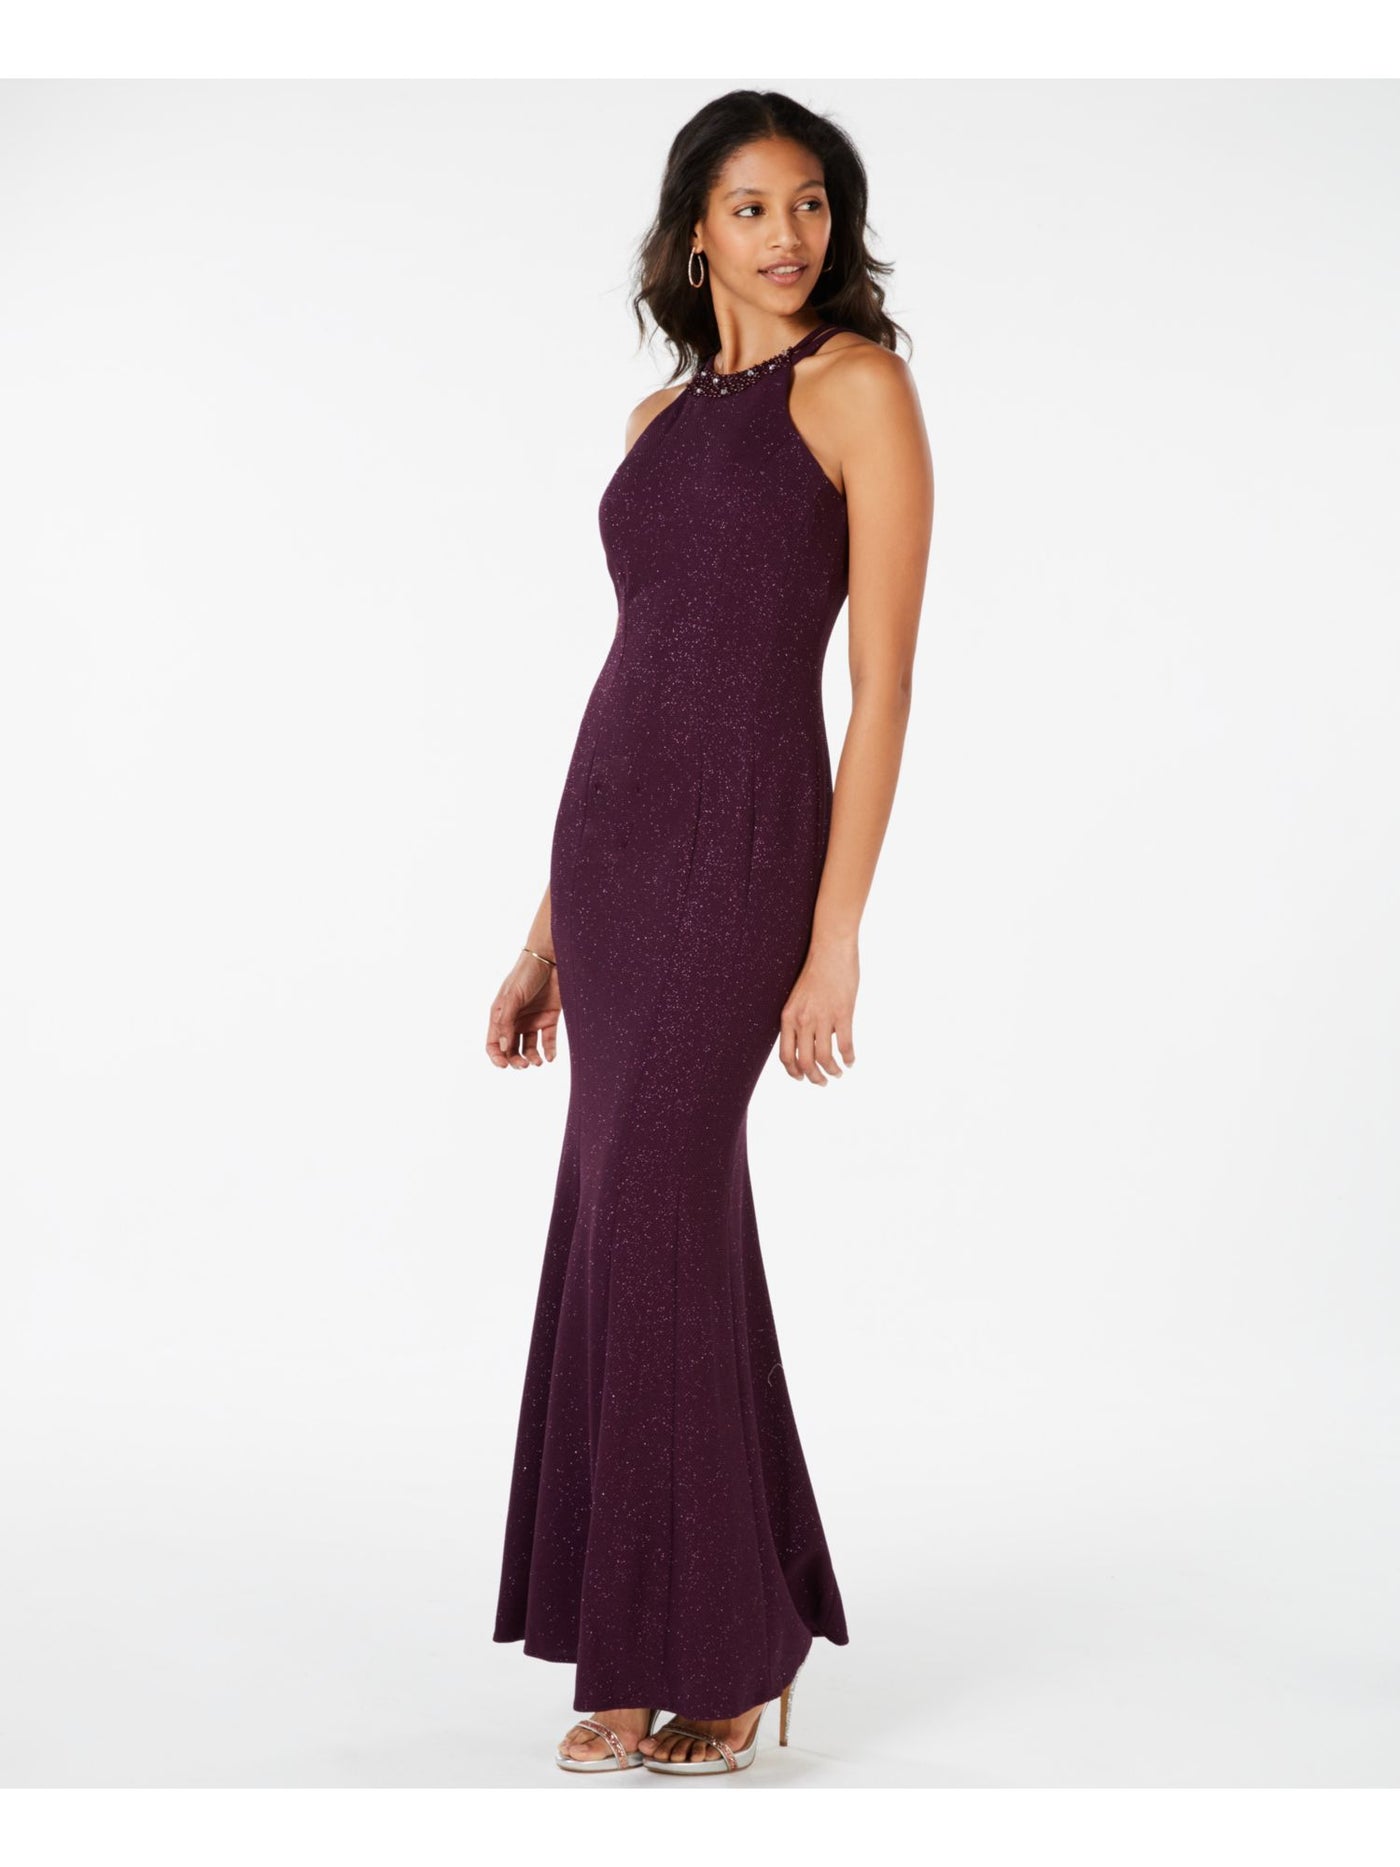 NIGHTWAY Womens Purple Glitter Beaded Sleeveless Halter Full-Length Formal Mermaid Dress 8